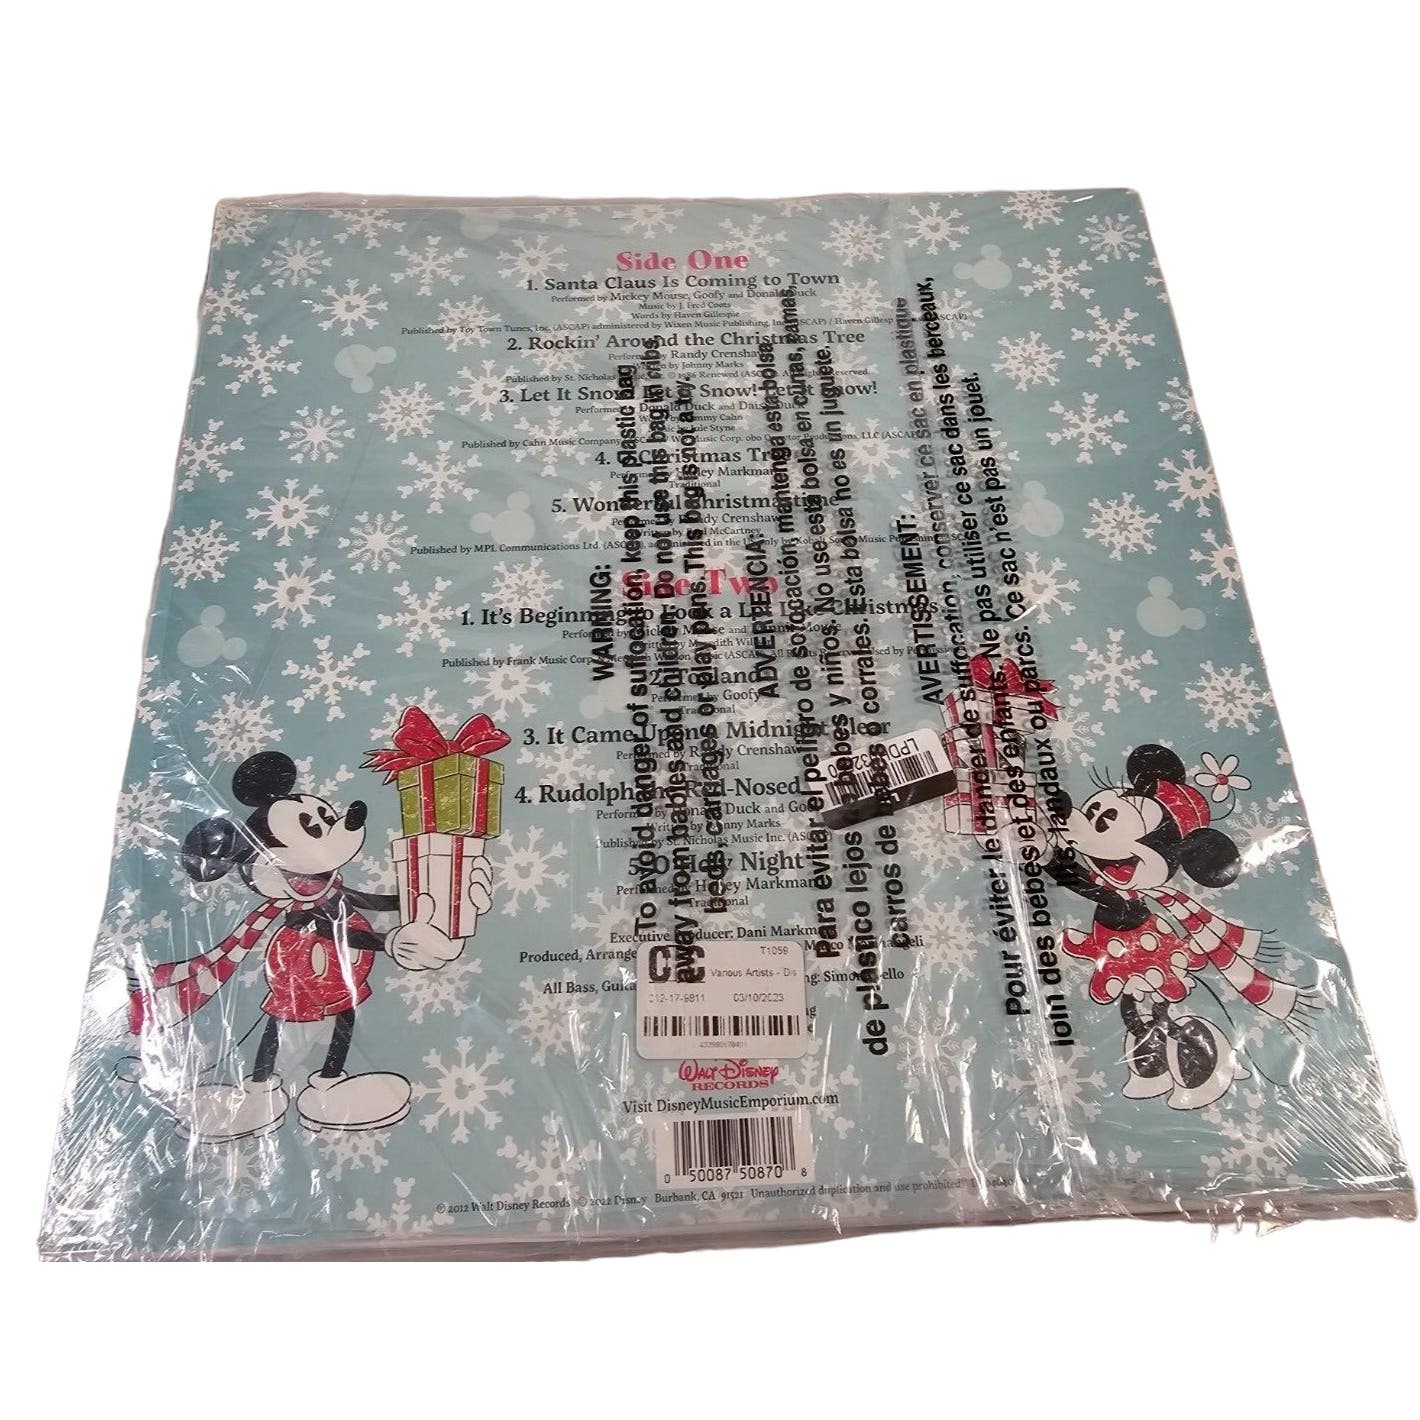 Disney's Jingle Bell Fun-Limited Edition (Vinyl)